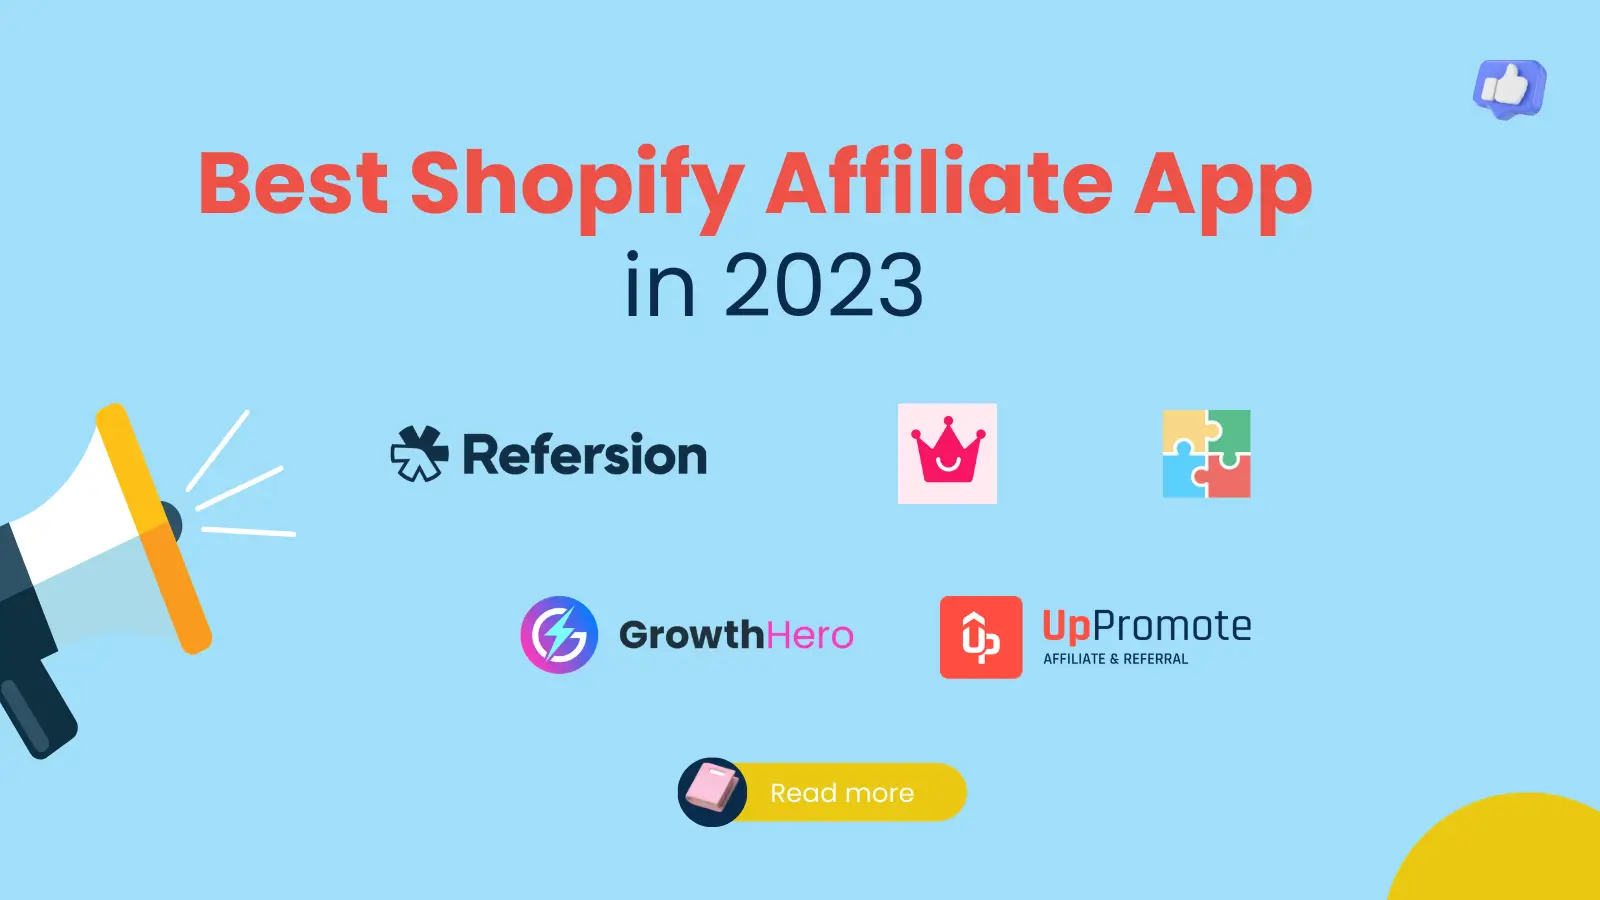 Best Shopify Affiliate App in 2023